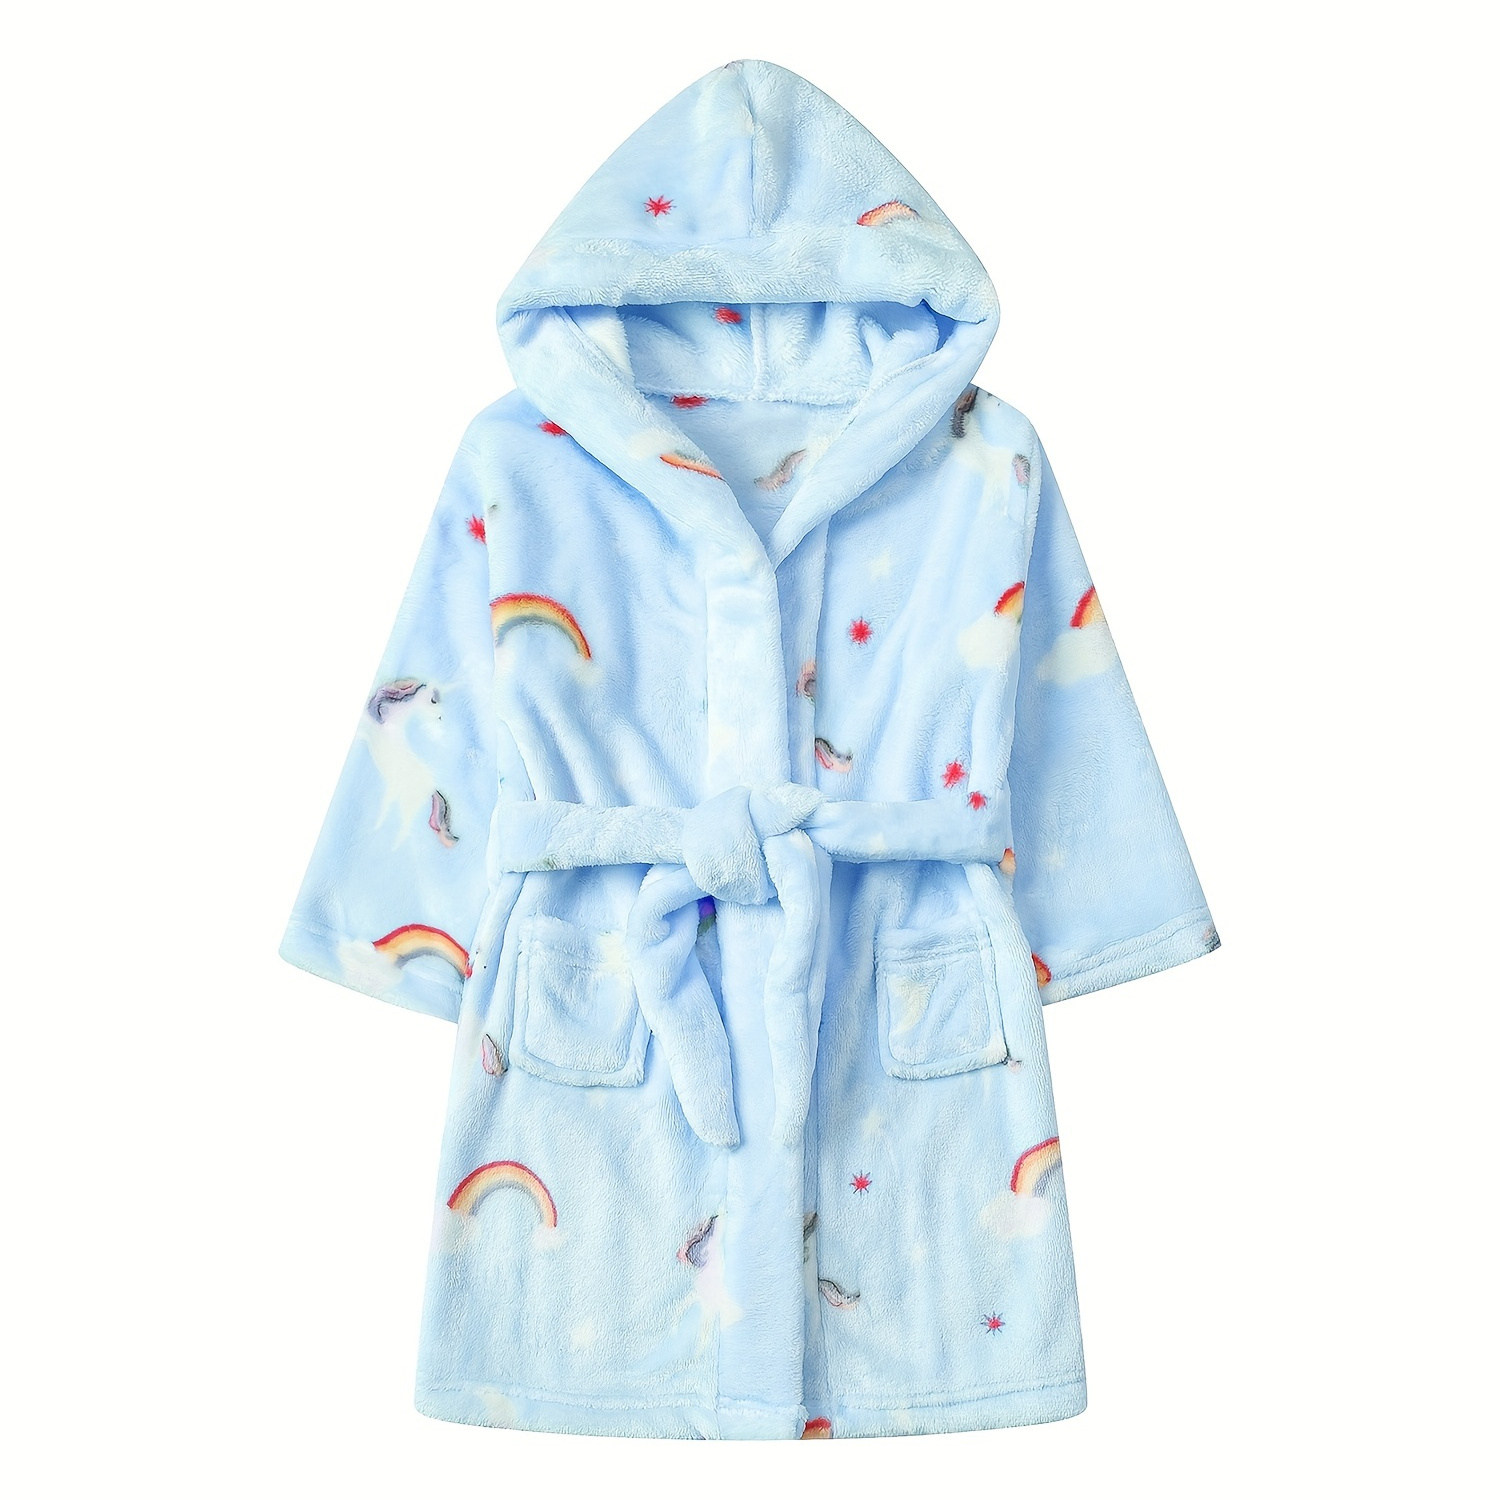 

Girls Flannel Hooded Bathrobe Kids Robes, Cartoon Patterned Soft Sleepwear Breathable Warm Homewear With Pockets